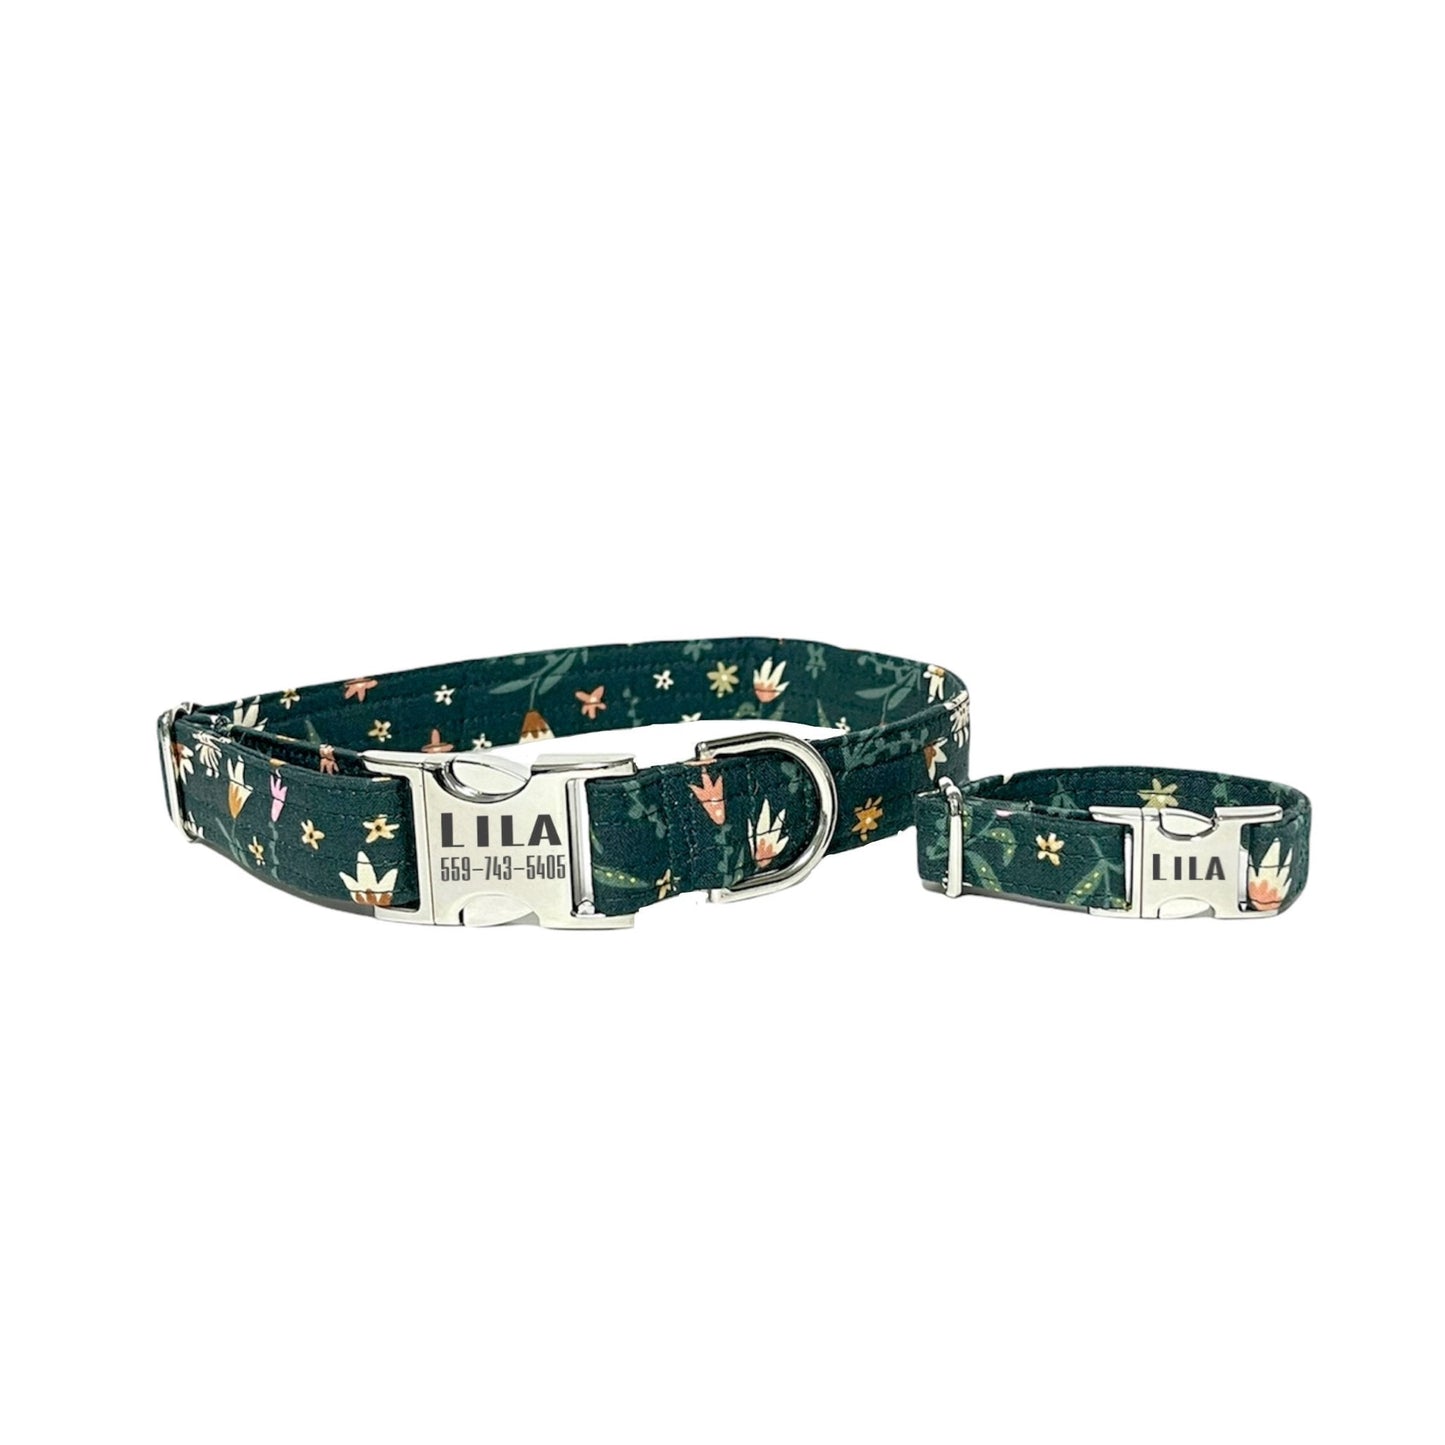 Fall Green Floral Collar & Friendship Bracelet Set - Fabric Style - muttsnbones